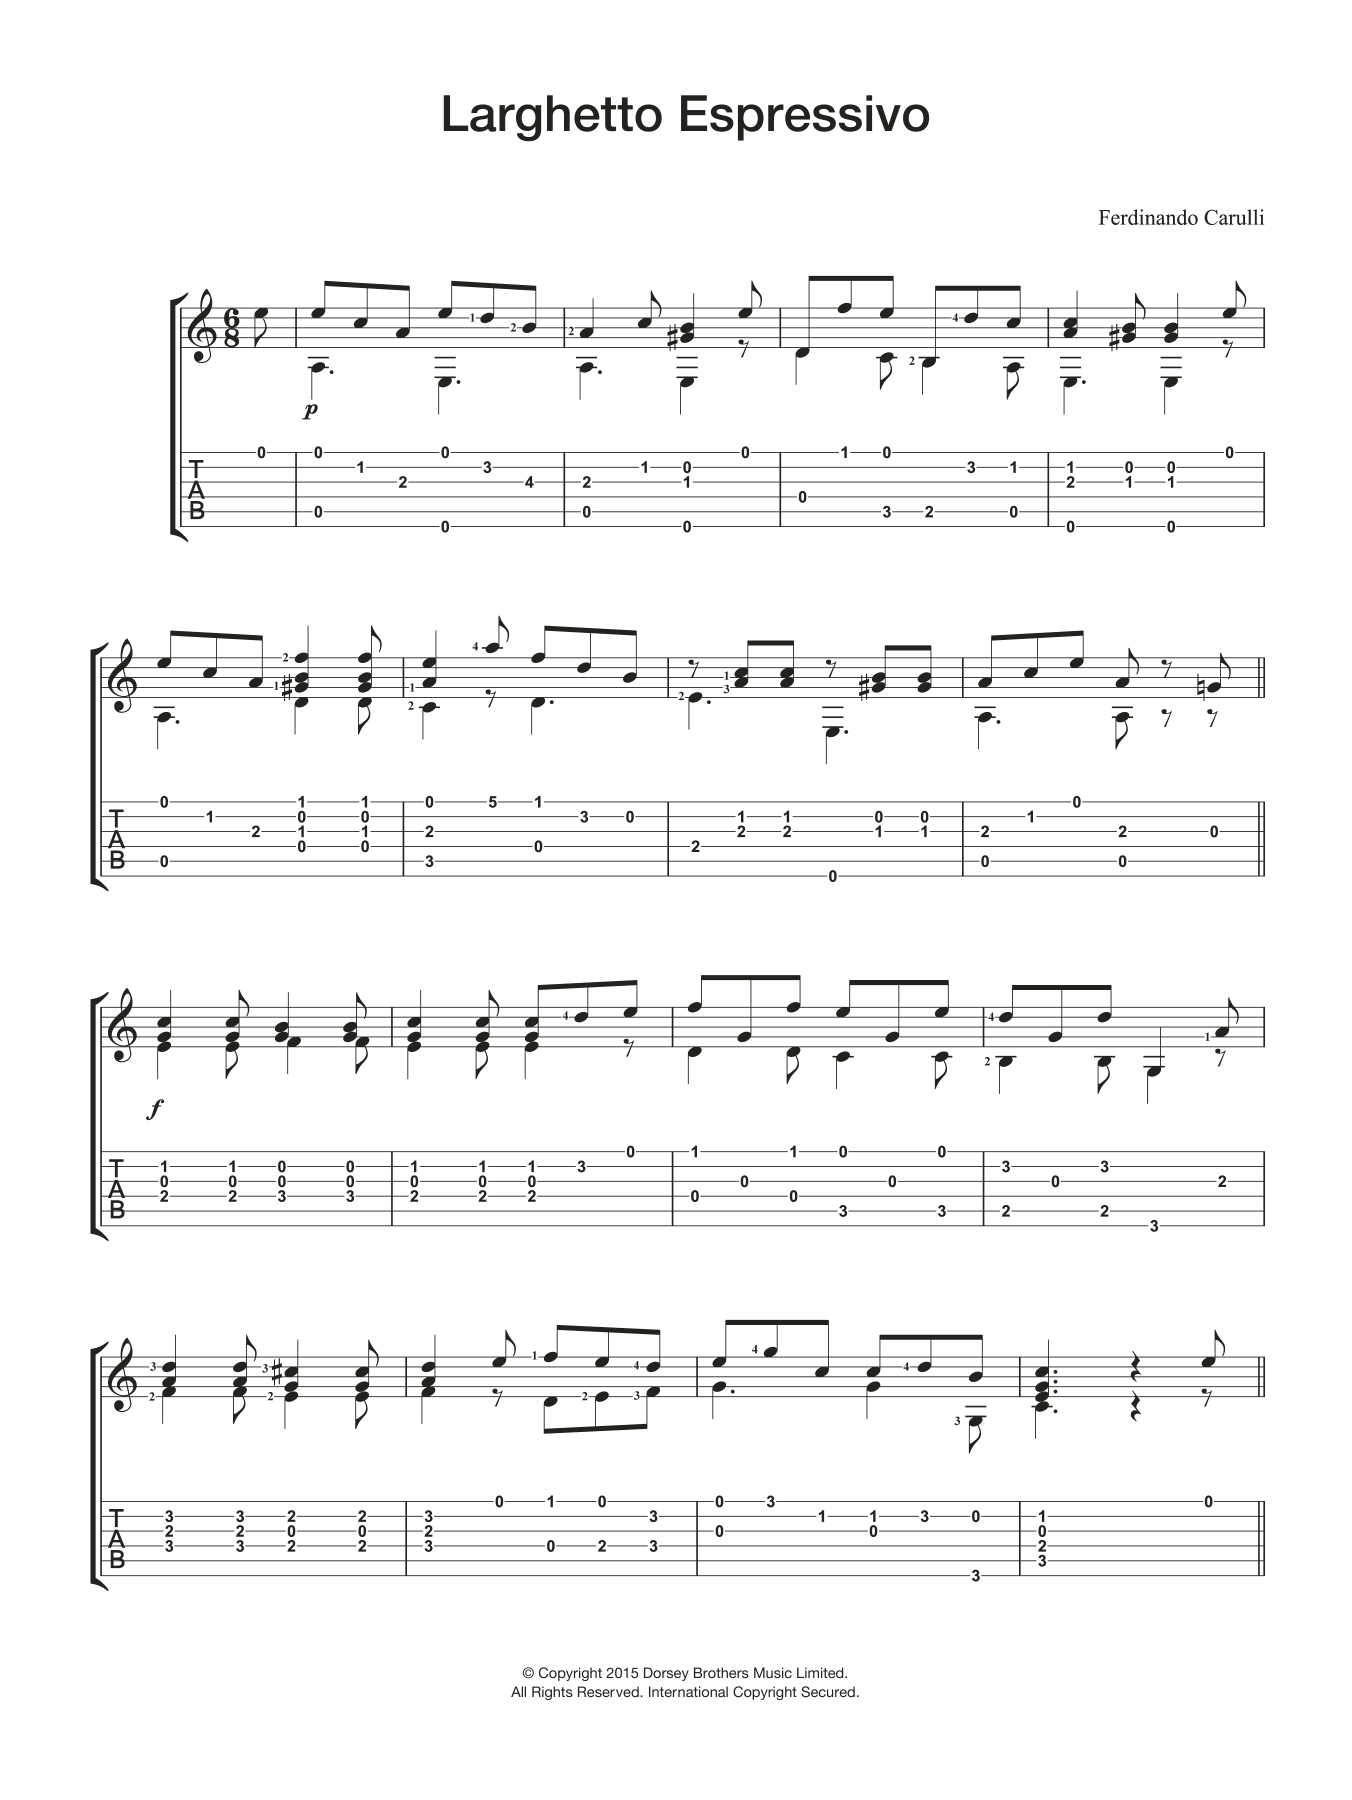 Download Ferdinando Carulli Larghetto Espressivo Sheet Music and learn how to play Guitar PDF digital score in minutes